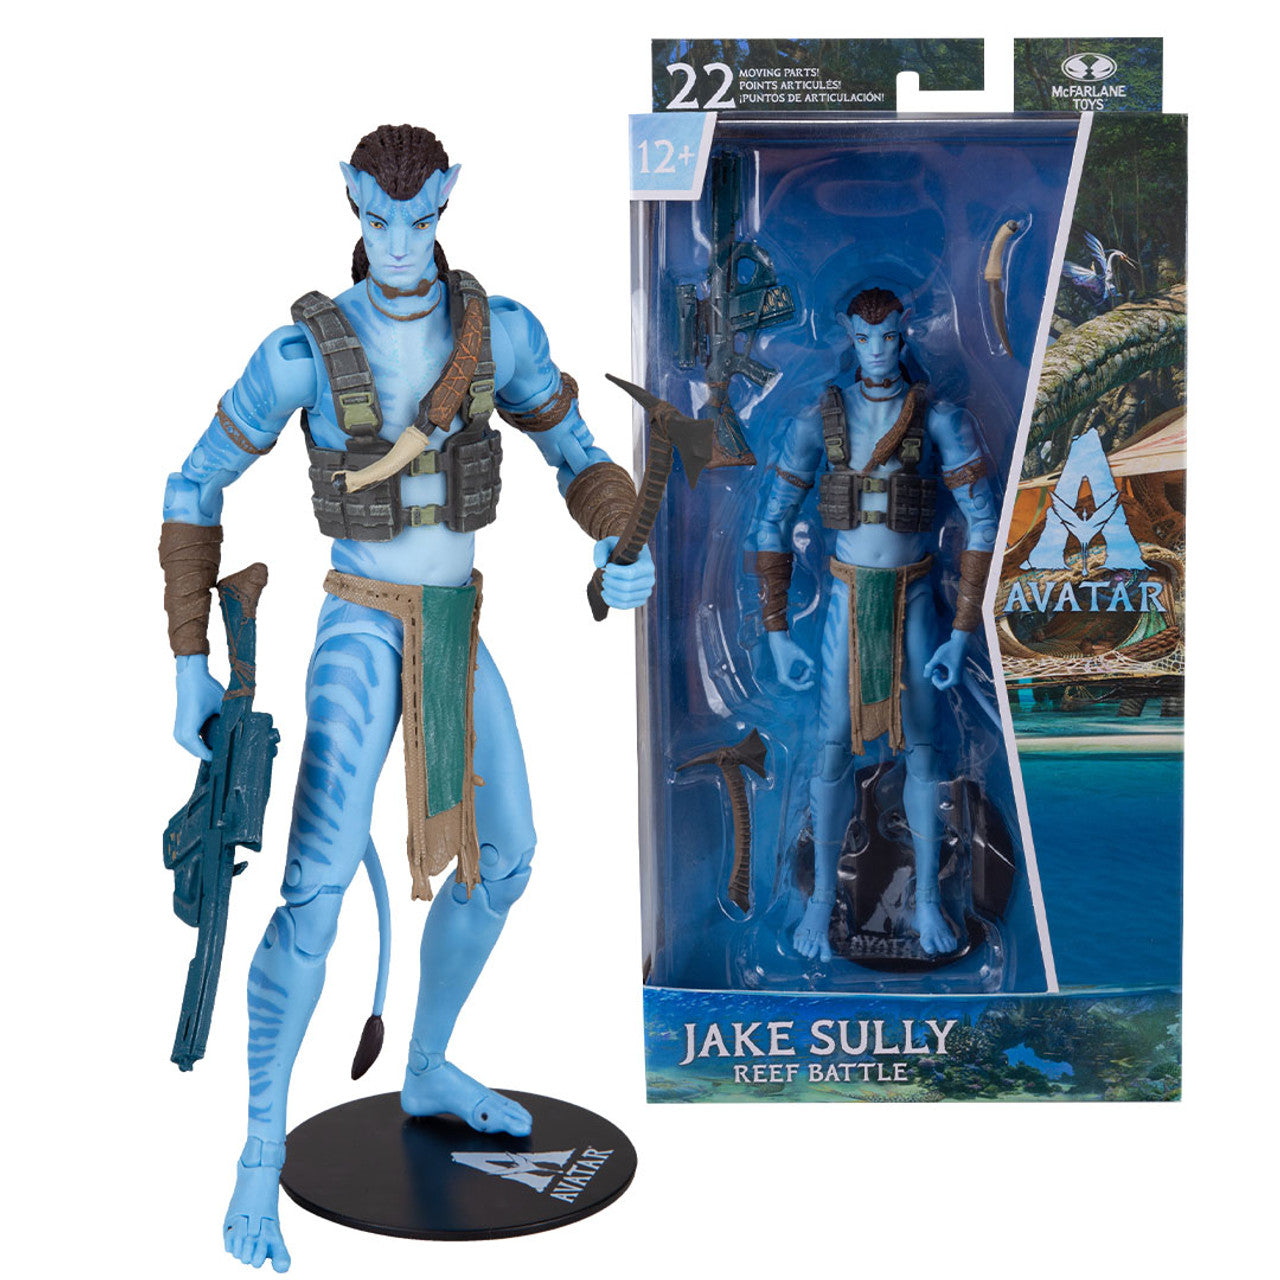 McFarlane Figura de Accion: Avatar The Way Of Water - Jake Sully Reef Battle 7 Pulgadas